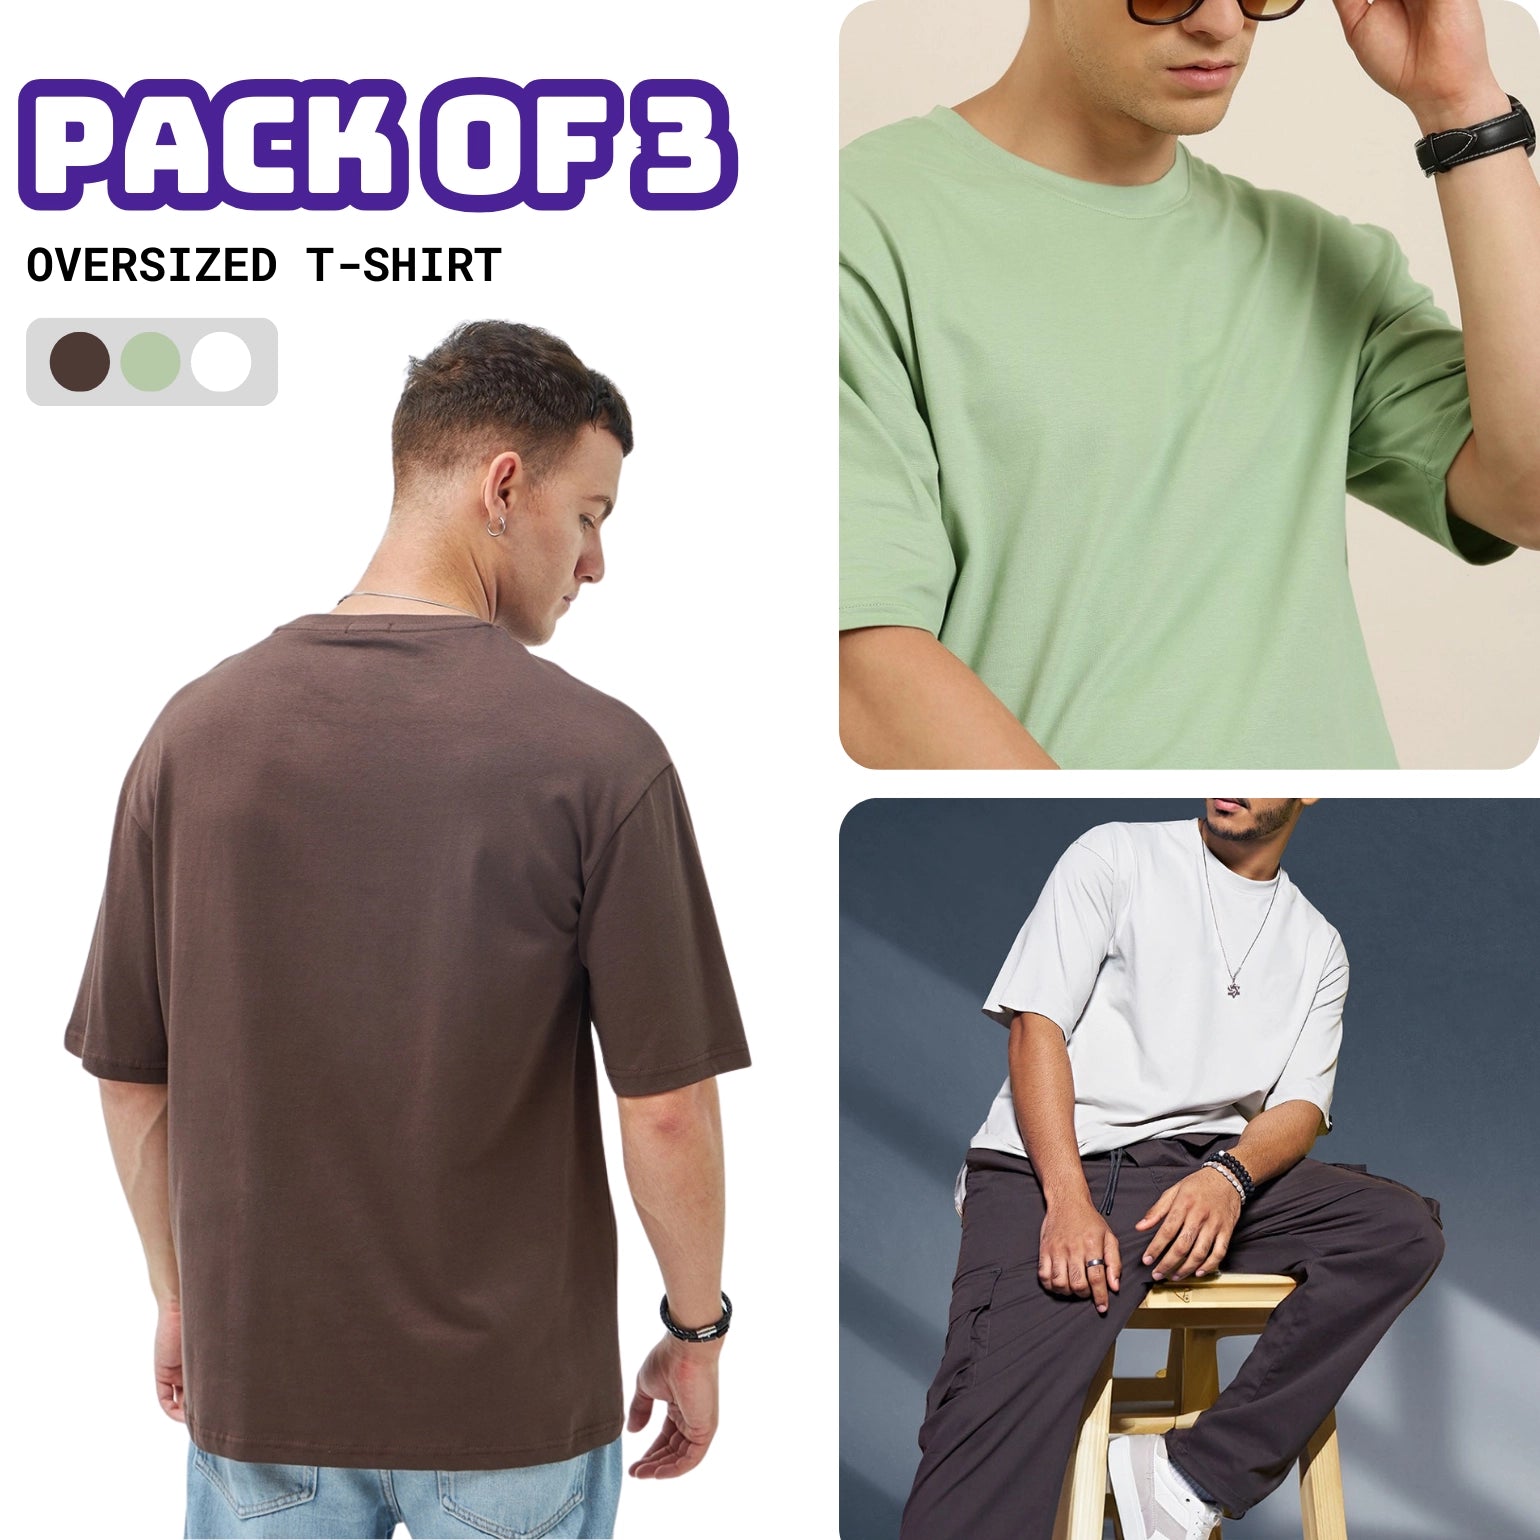 Pack of 3 Oversized T-shirt in Brown, Sage Green, White - SleekandPeek